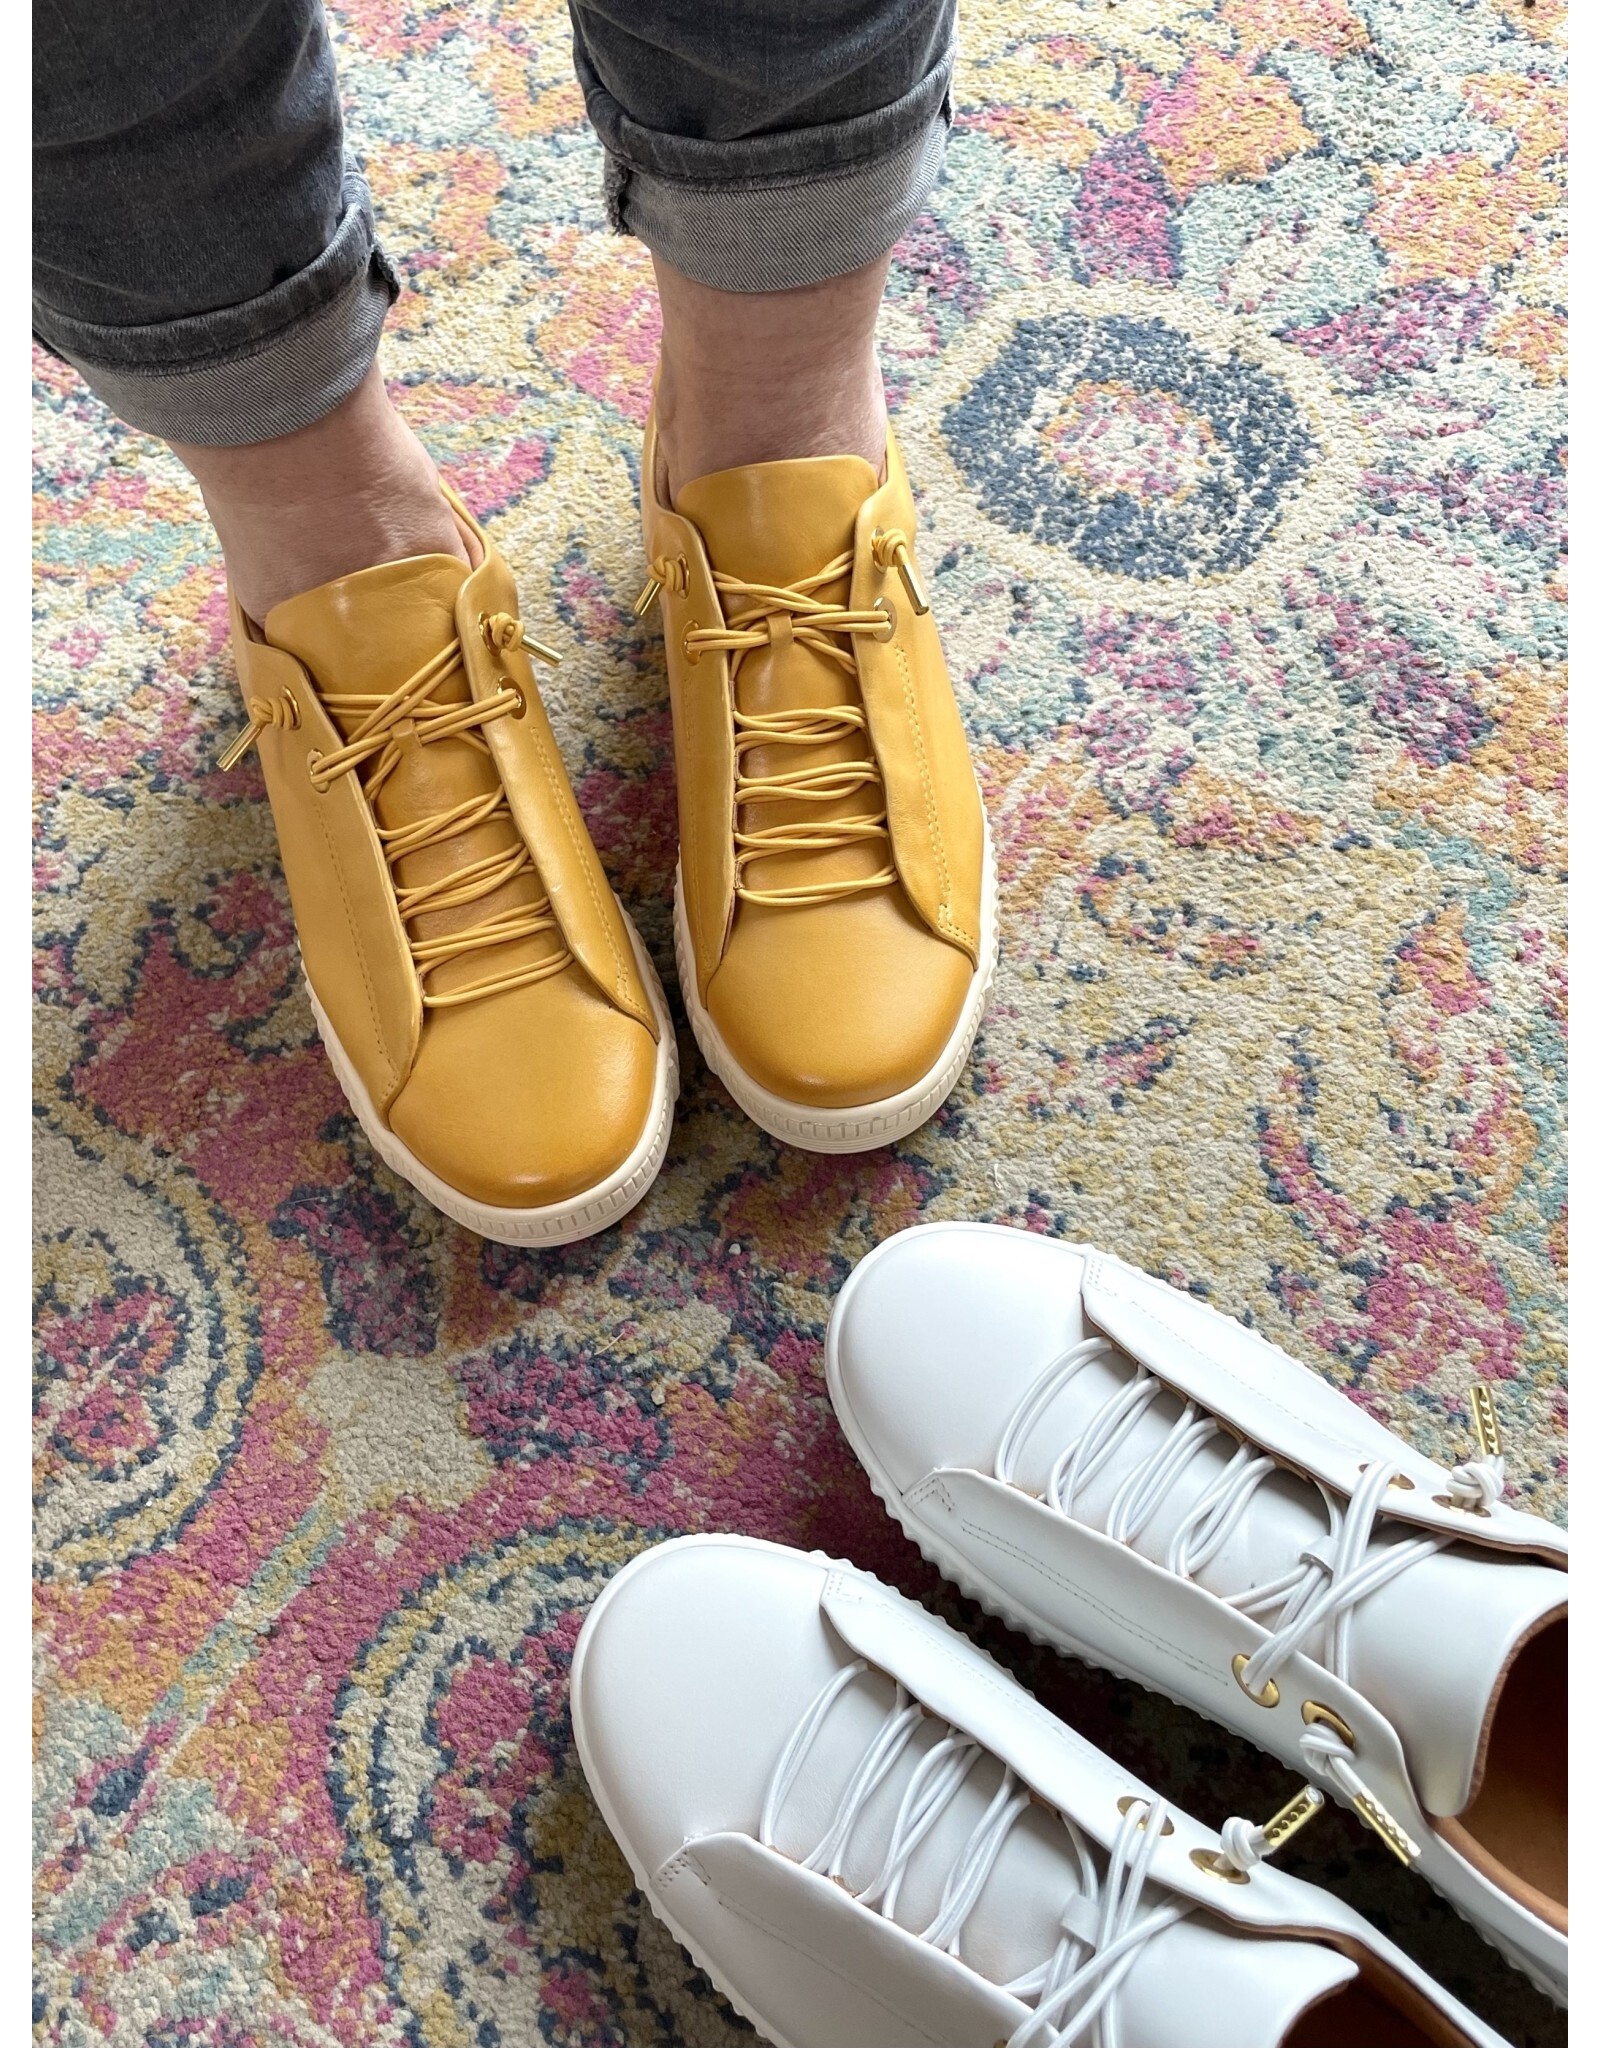 EOS EOS - Jool Sneaker (Mustard)